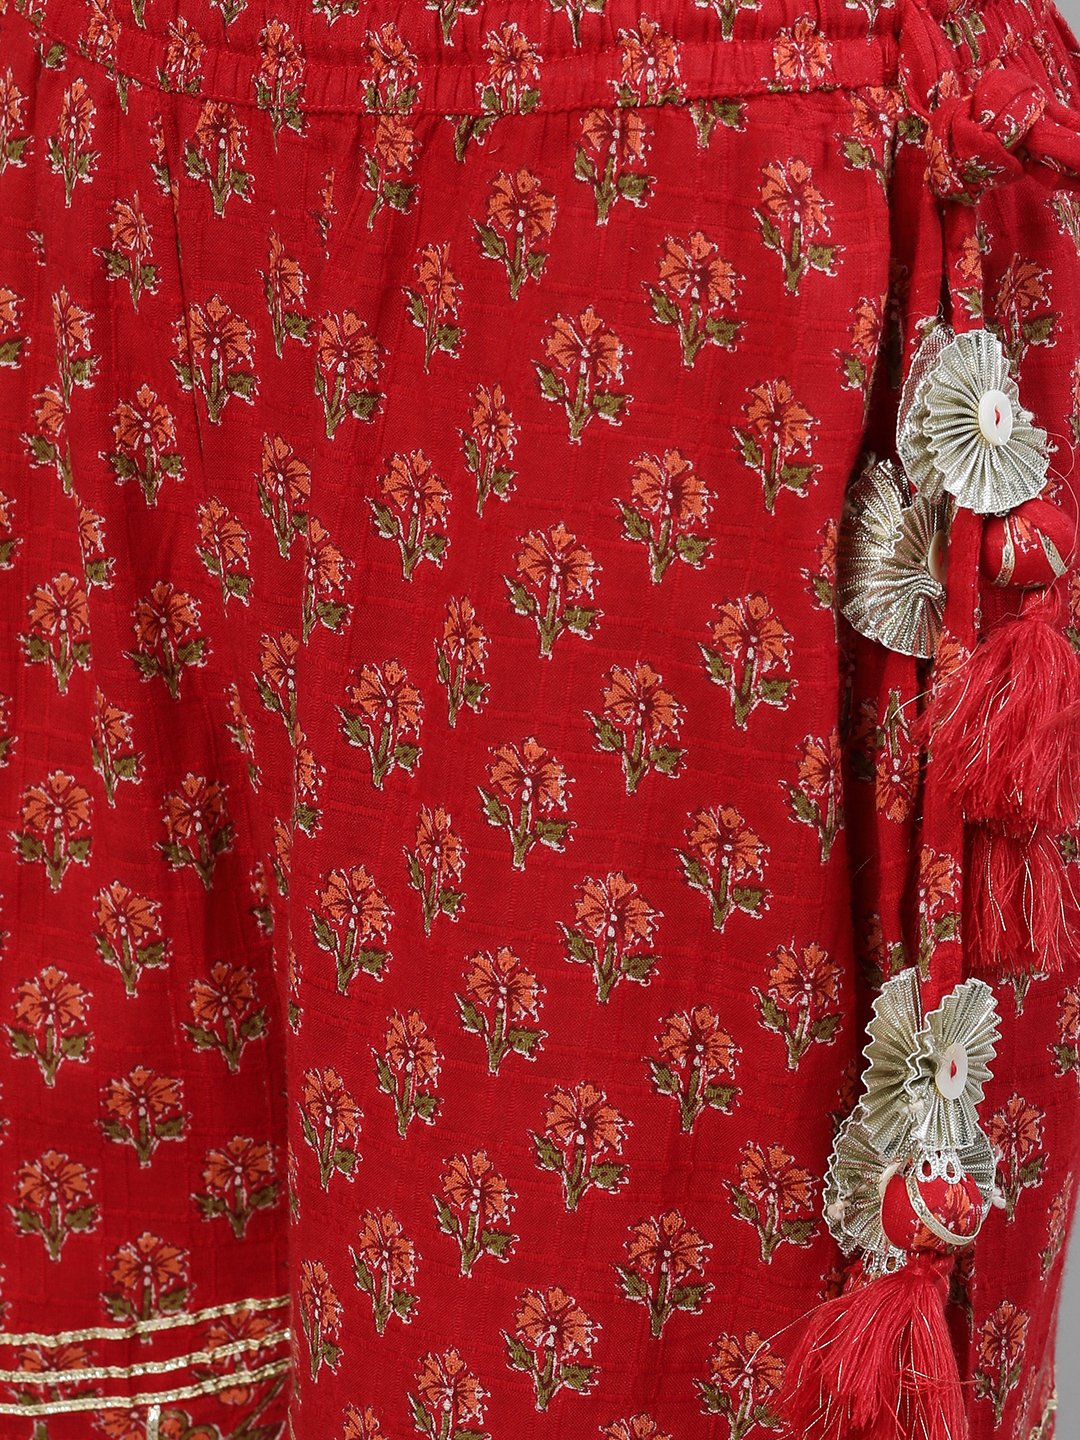 Ishin Women's Cotton Red Embellished Peplum Kurta Sharara Set